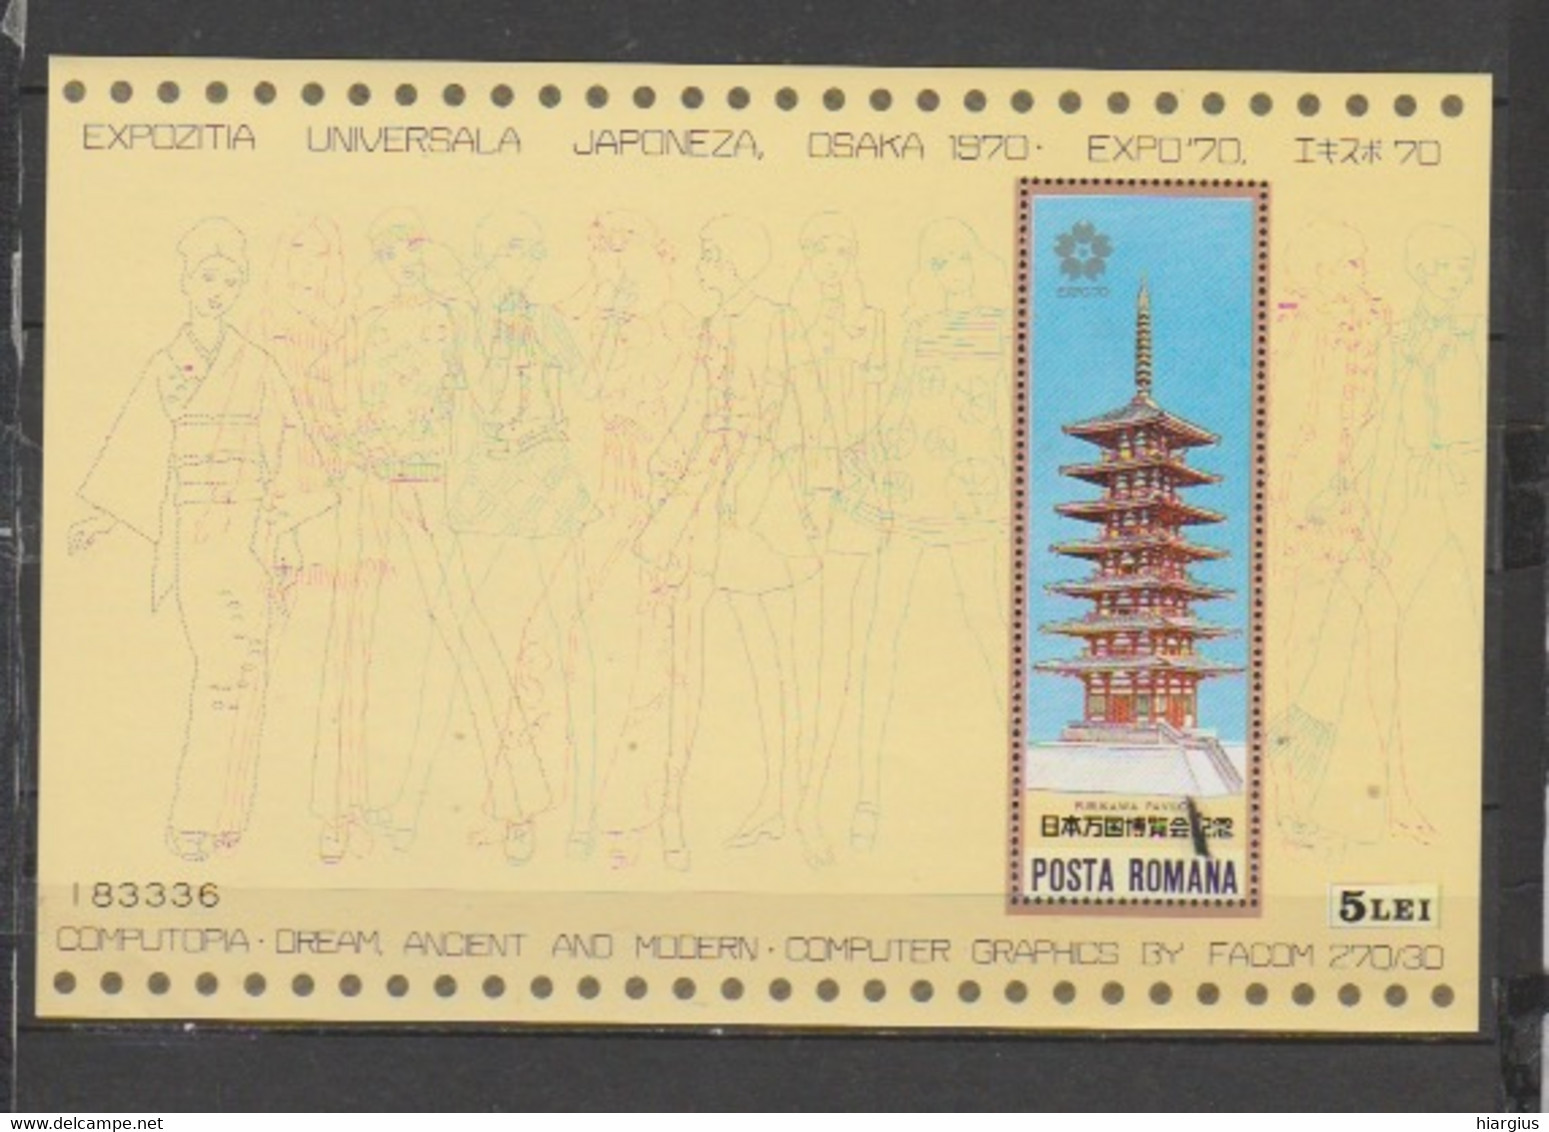 ROMANIA-Souvenir Sheet" EXPO 70 INTERNATIONAL EXHIBITION OSAKA JAPAN" - 1970 – Osaka (Japan)